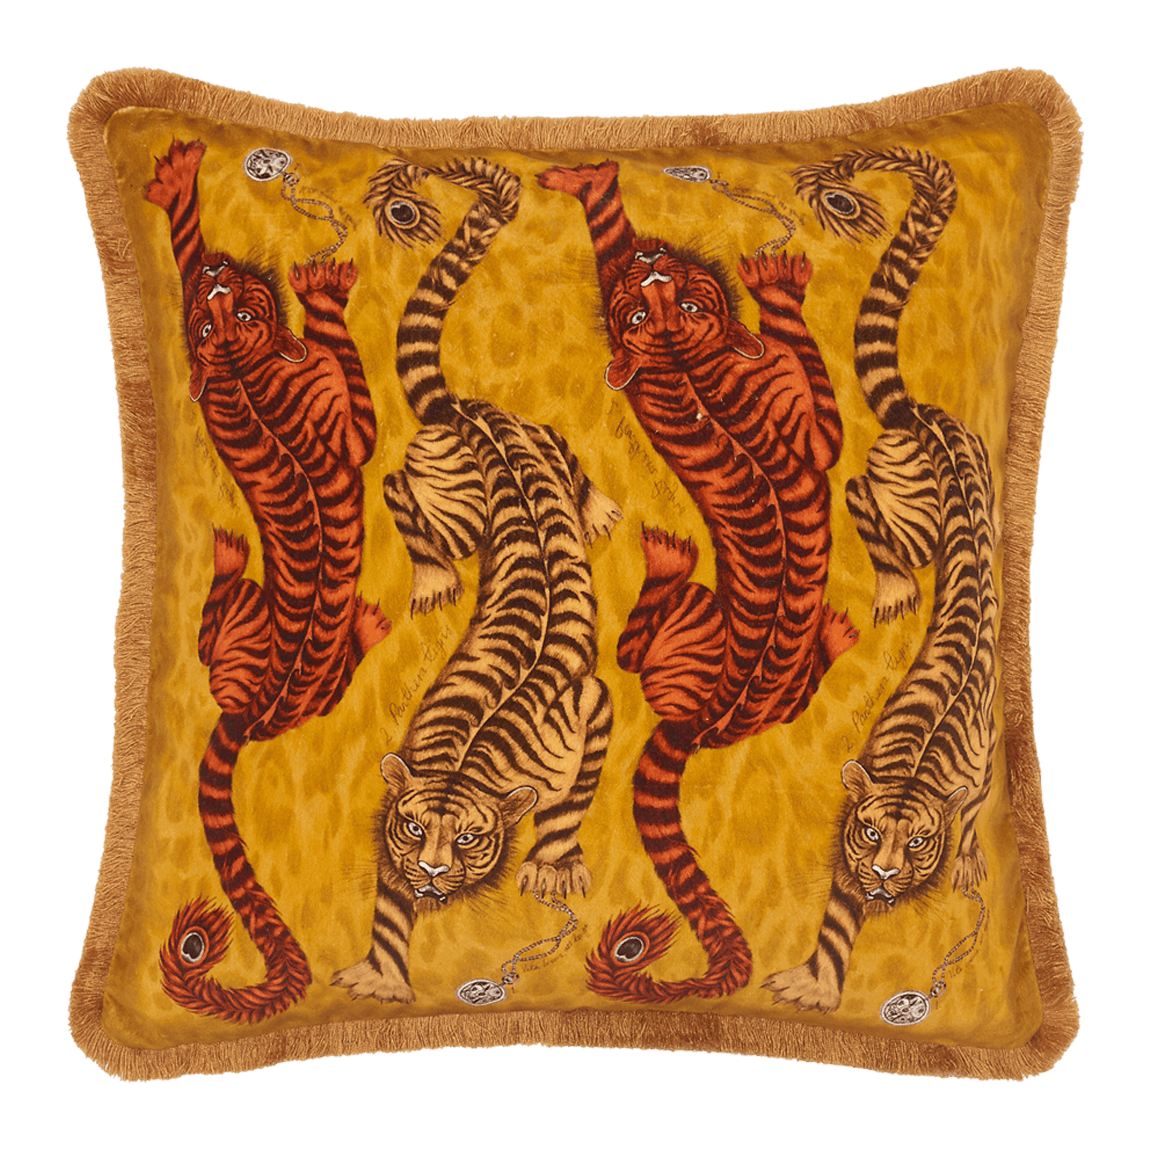 Tigris Luxury Velvet Cushion: Teal